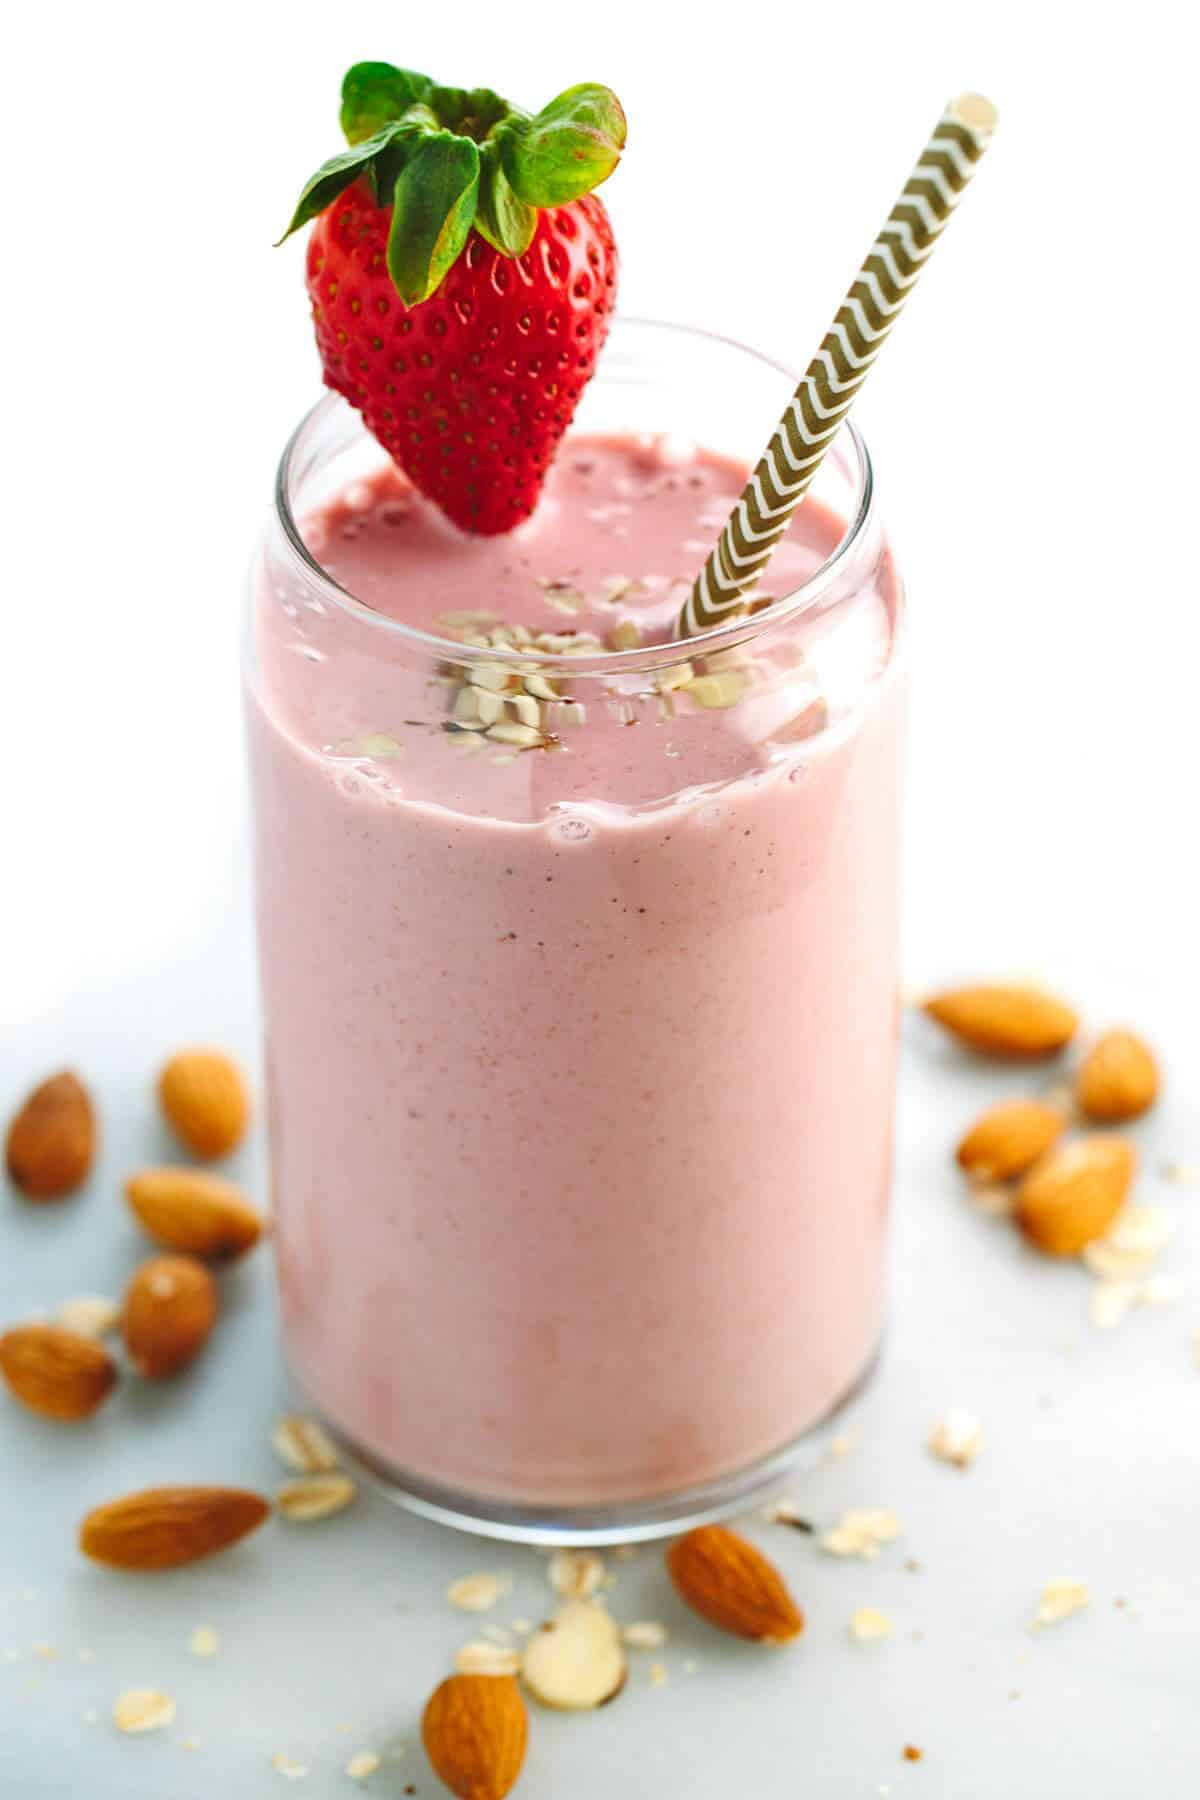 Fruit Yogurt Smoothies Recipes
 Strawberry Banana Smoothie Recipe with Almond Milk